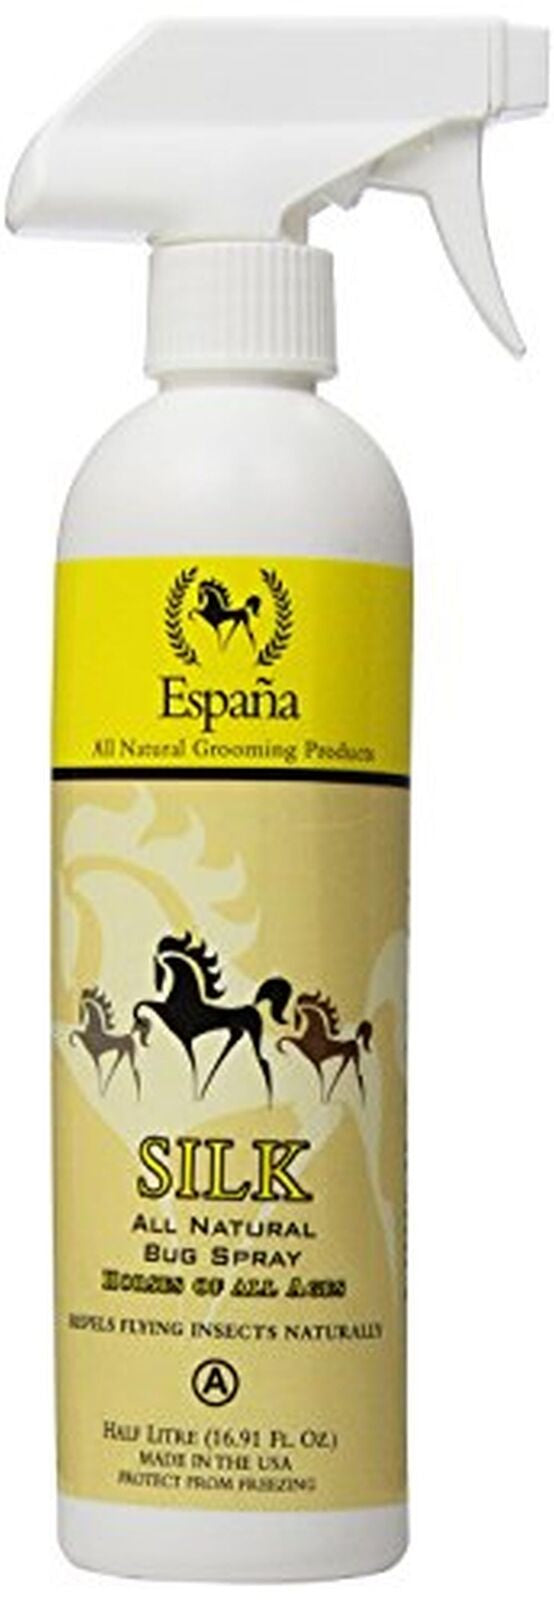 EspanaSILK Natural Bug Spray